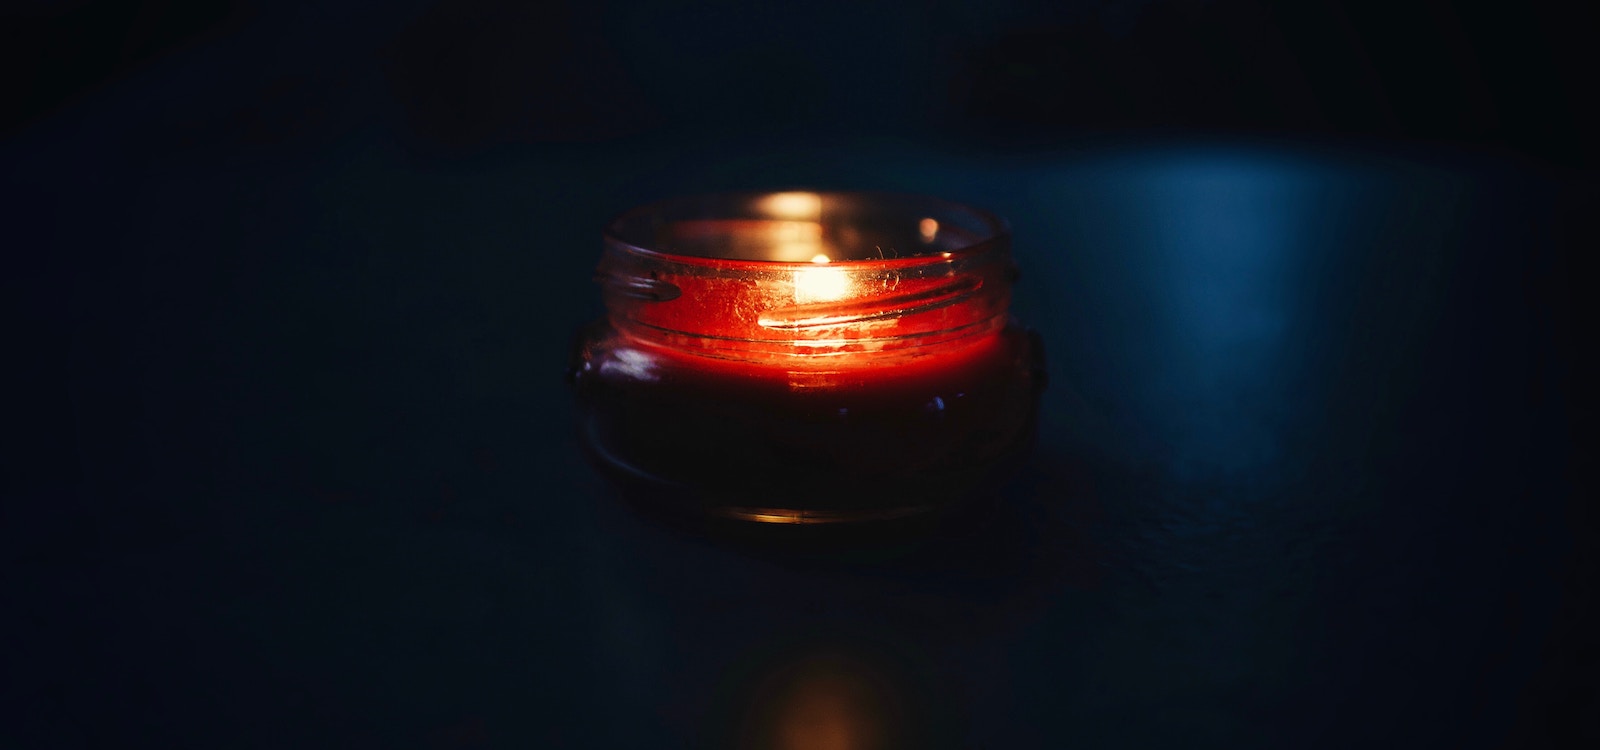 Beautiful candle in the dark